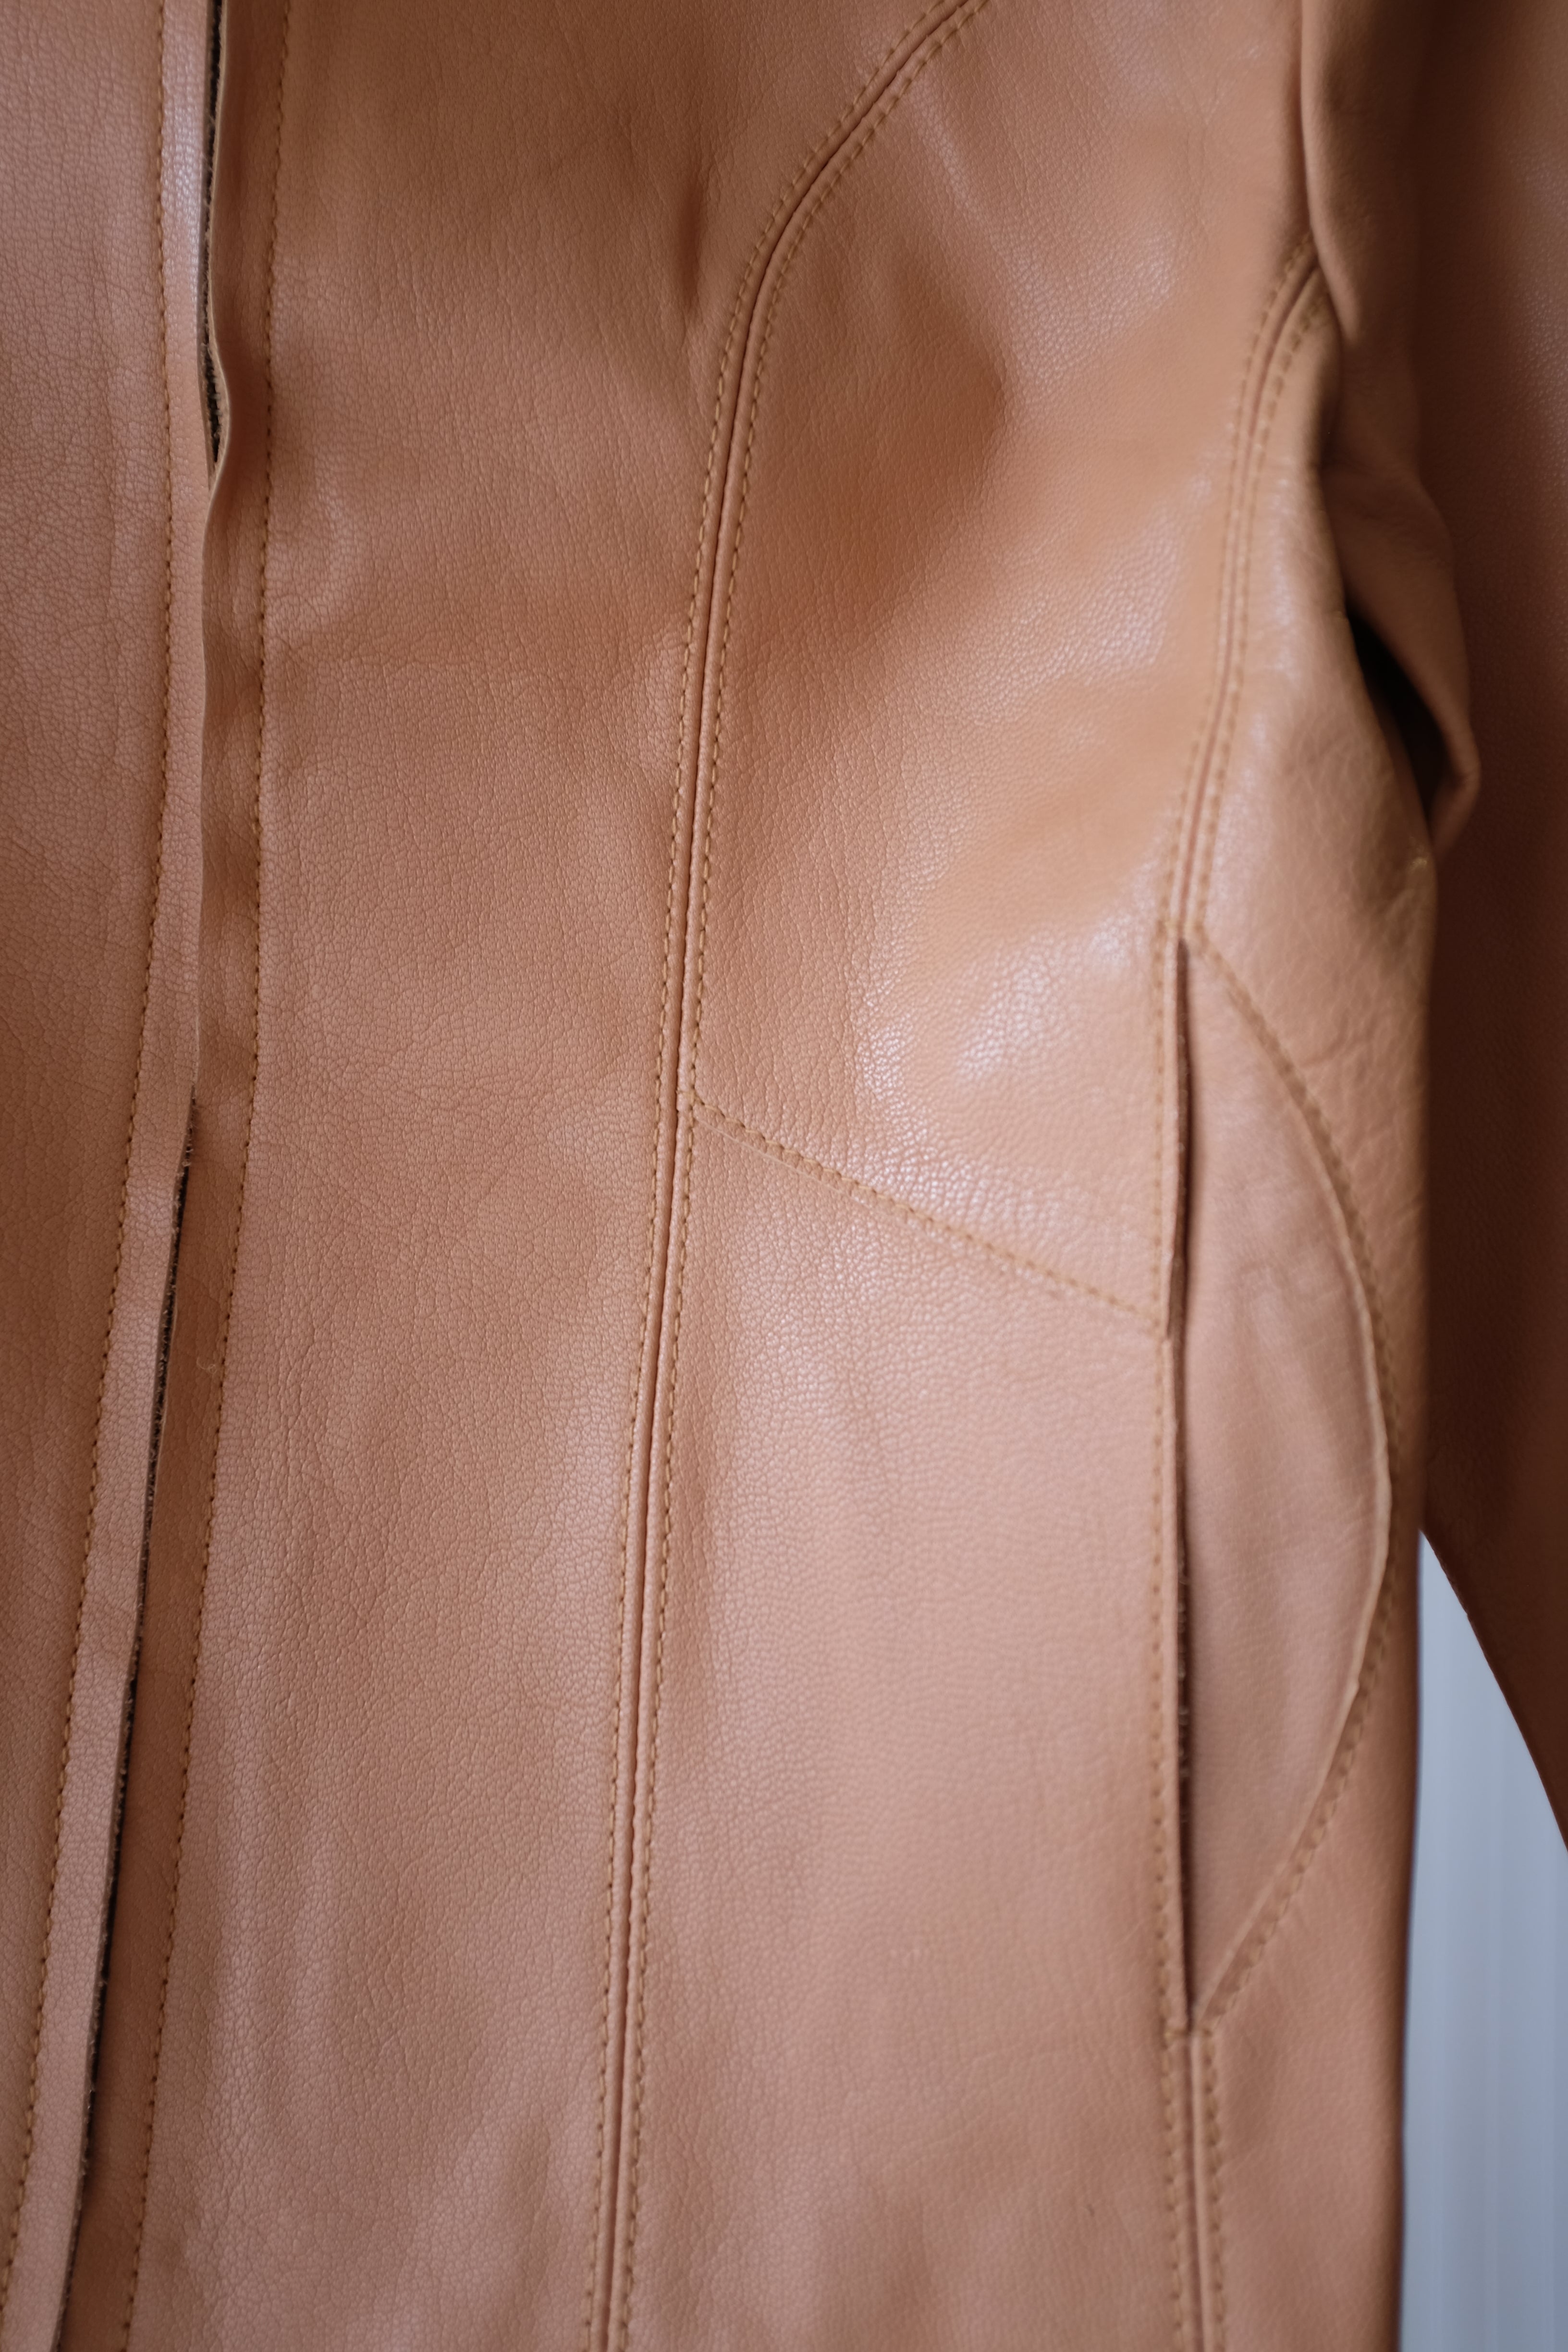 Gap Tan Leather Jacket - Vintage